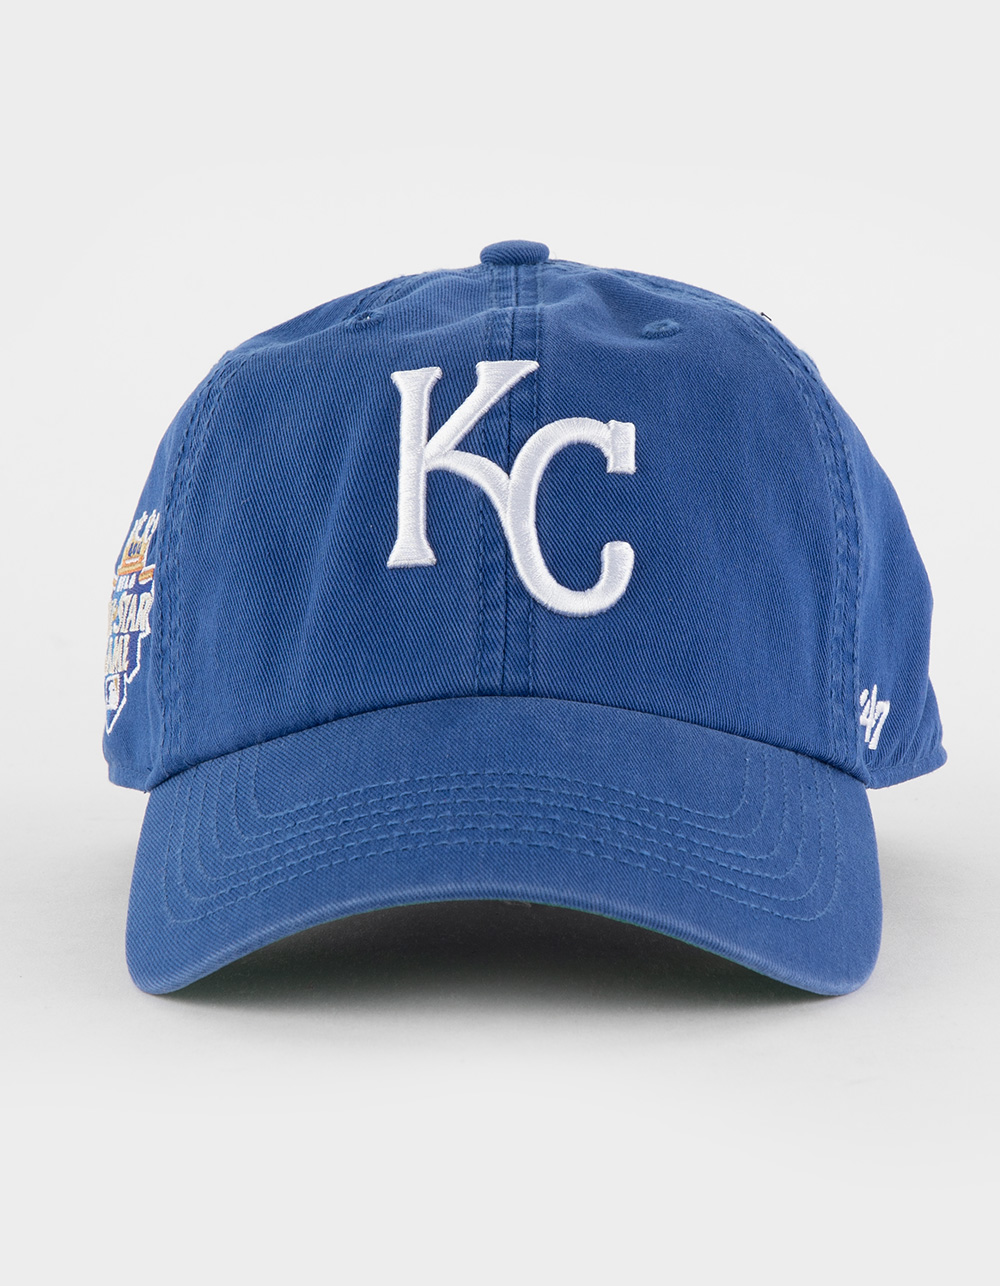 Men's '47 Royal Kansas City Royals Sure Shot Classic Franchise Fitted Hat Size: Medium